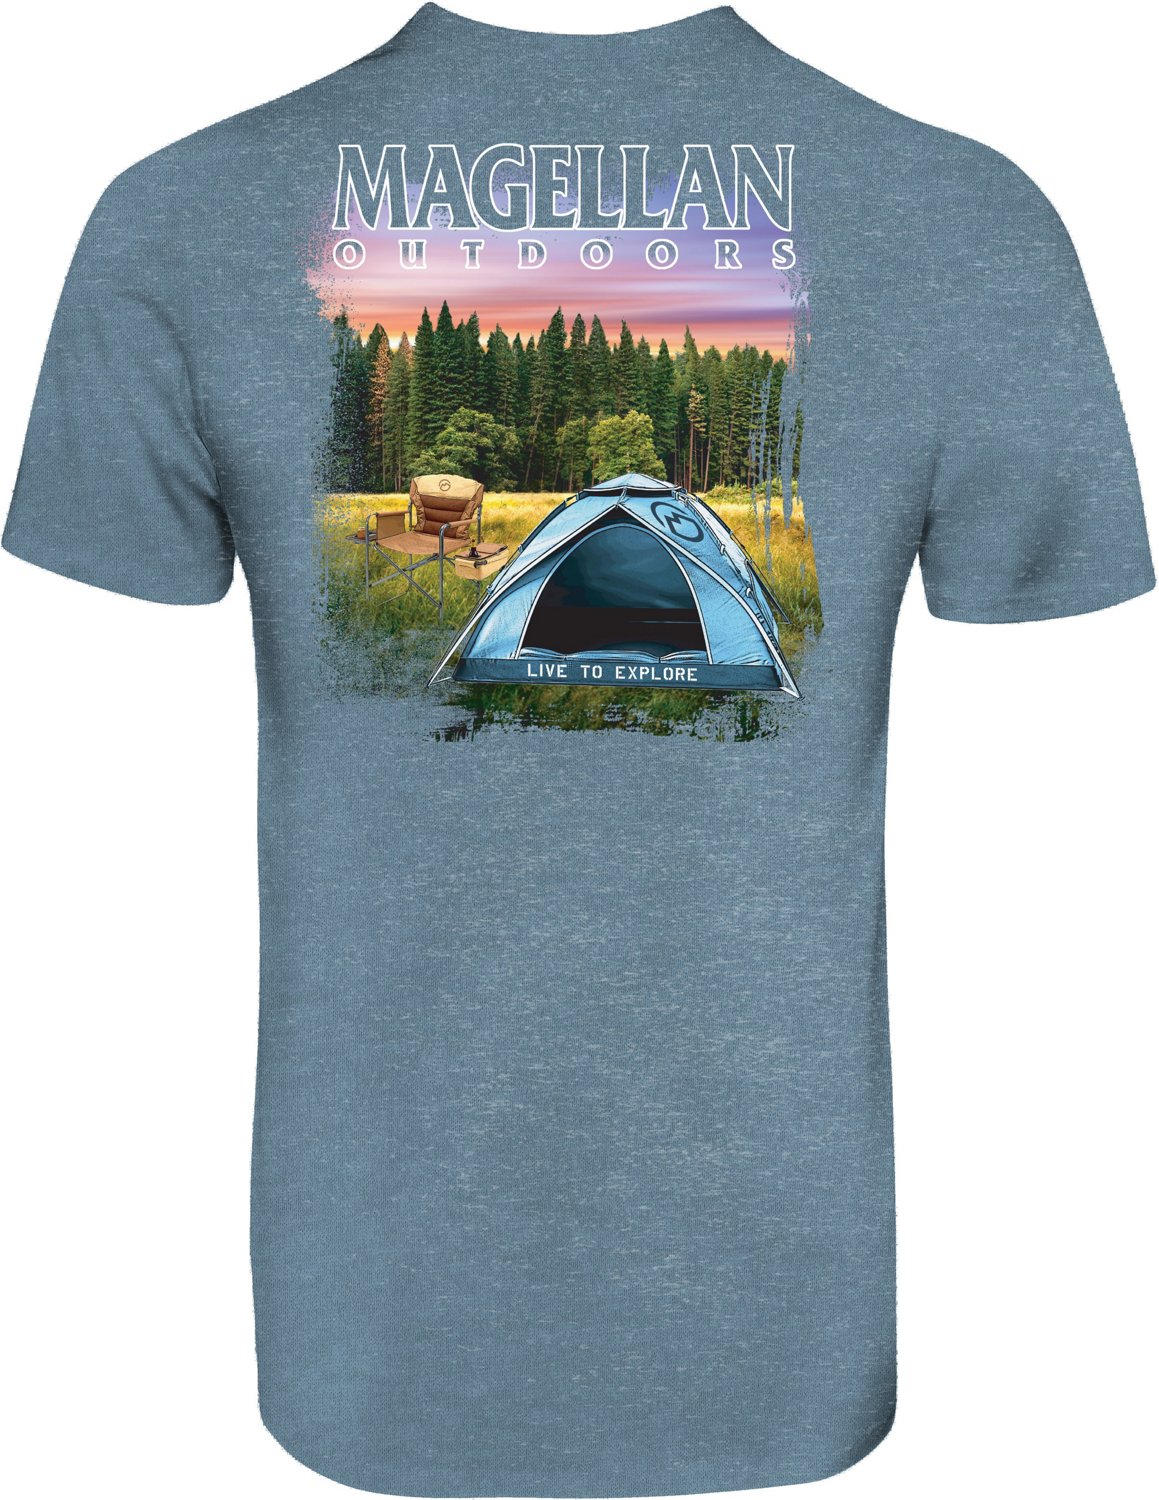 Magellan Outdoors, Shirts & Tops